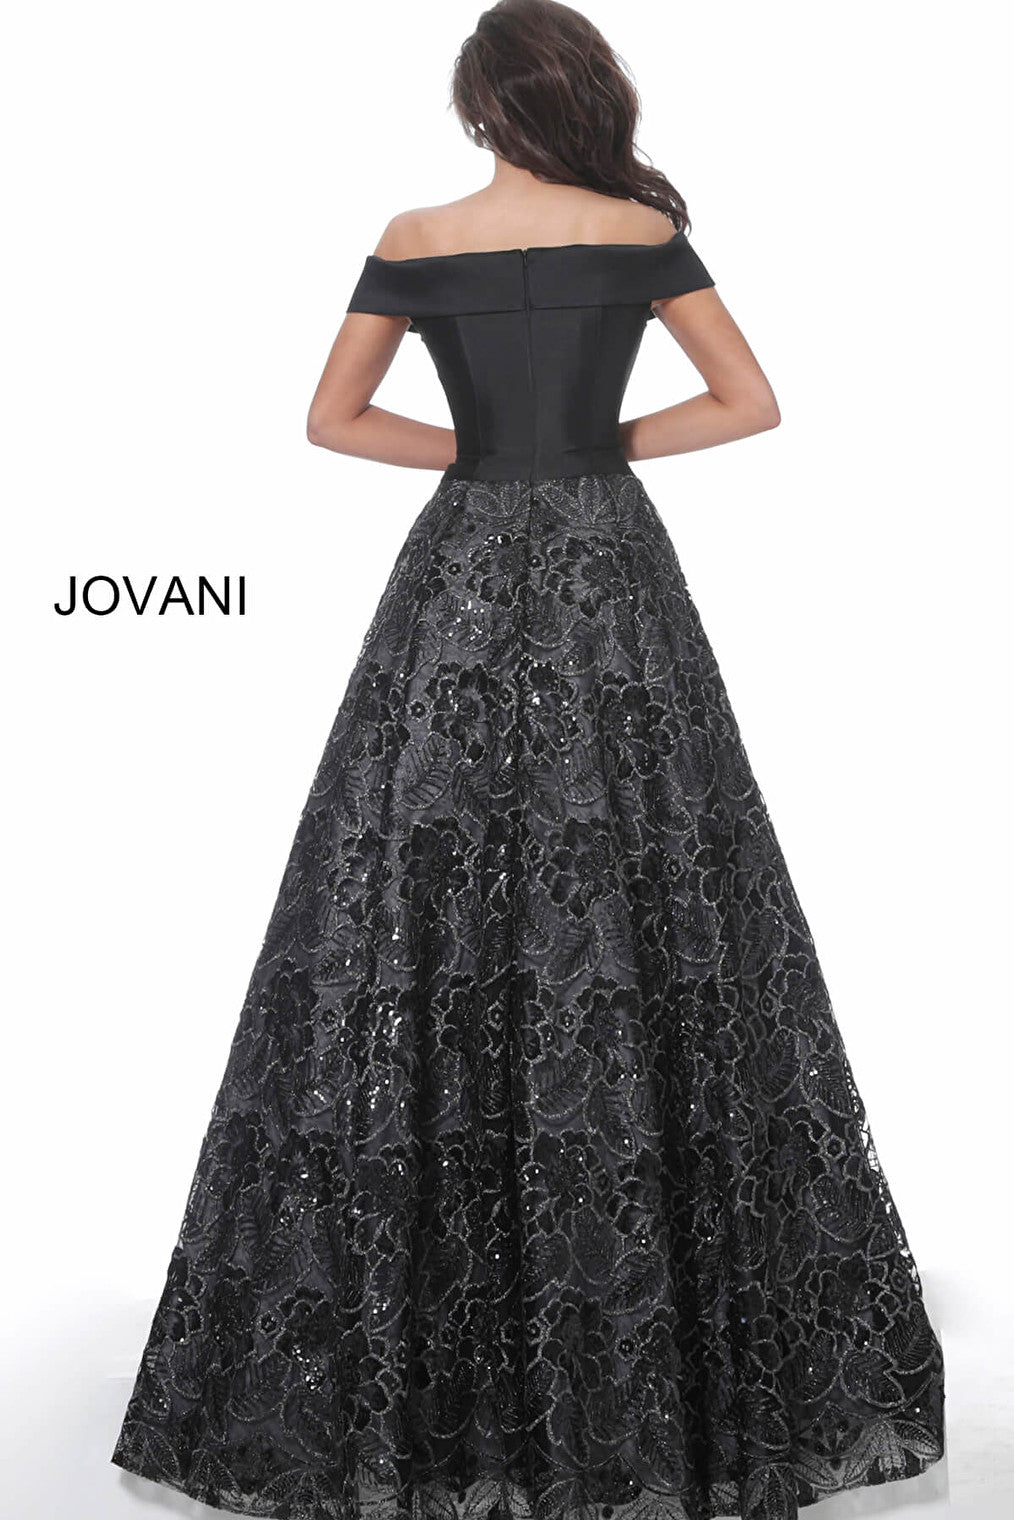 Black A line evening dress Jovani 03331